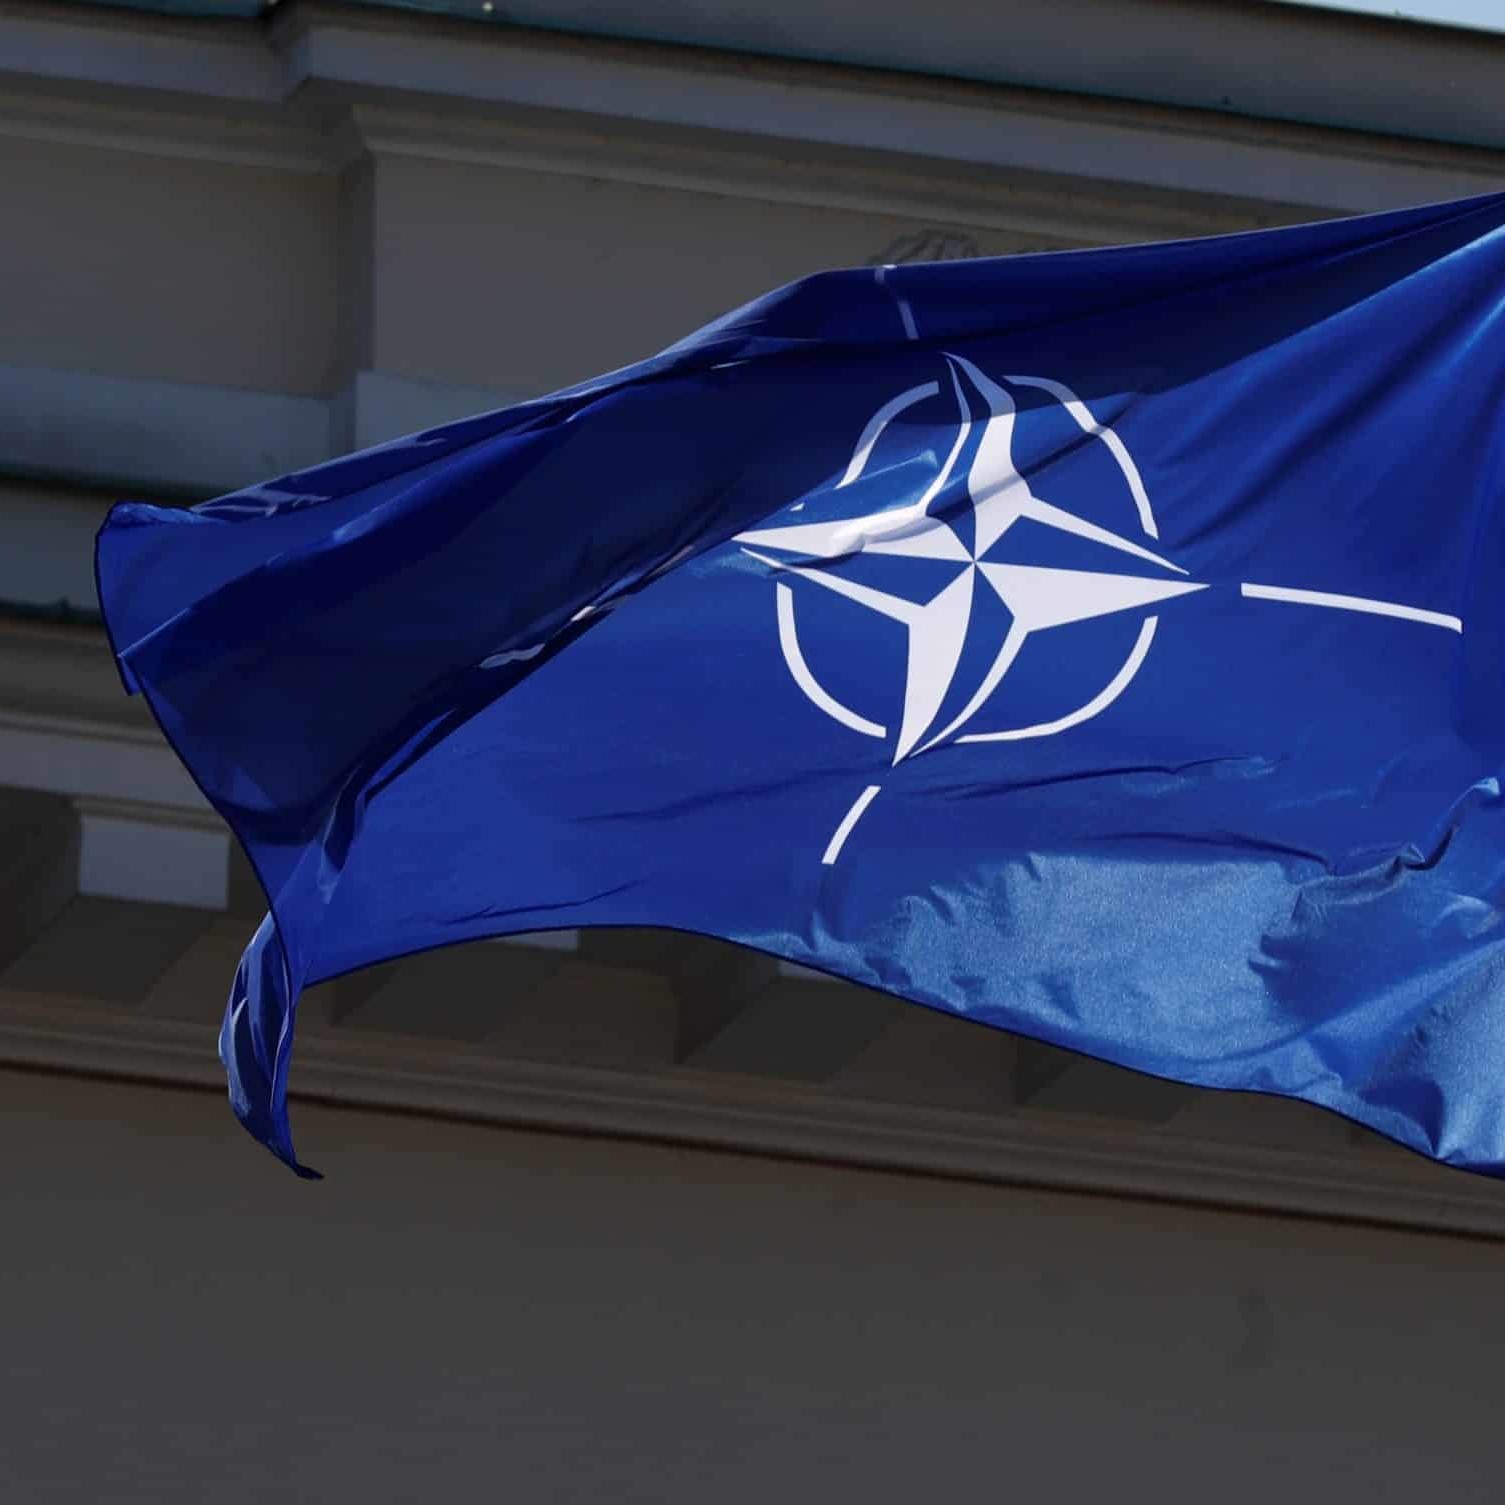 NATO is not brain dead yet